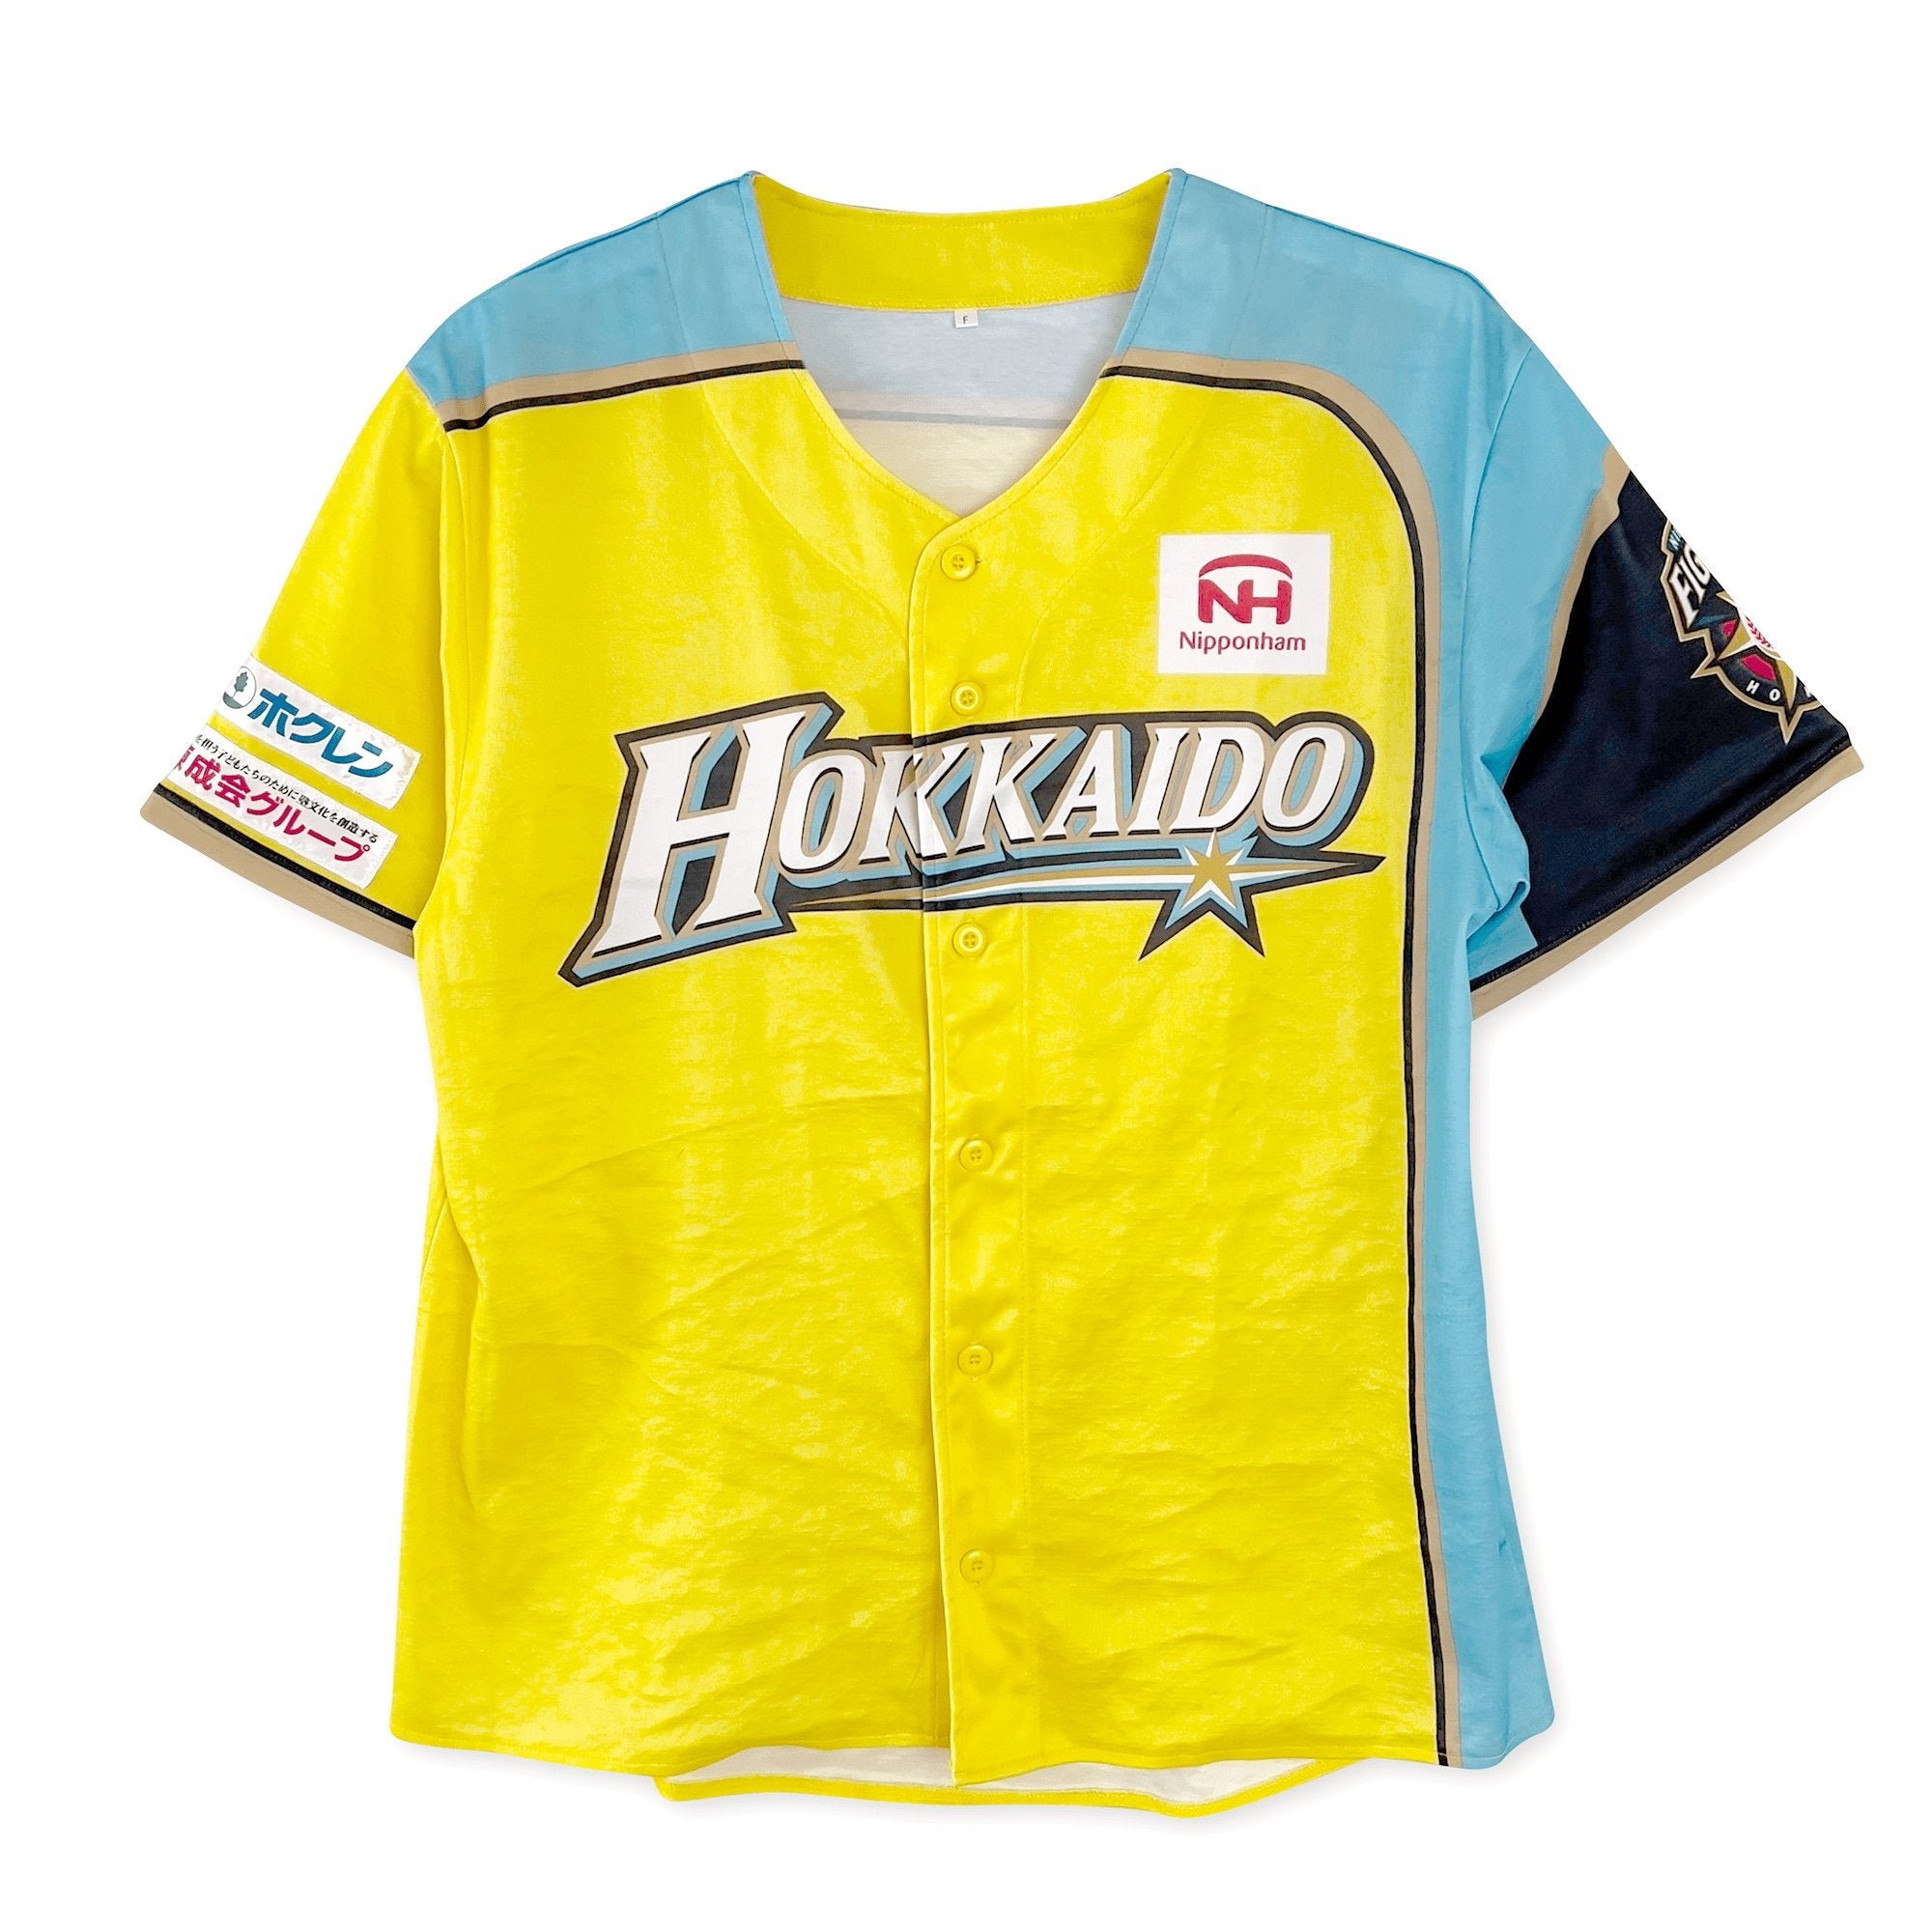 Hokkaido Nippon-Ham Fighters Baseball Jersey Includes Patch